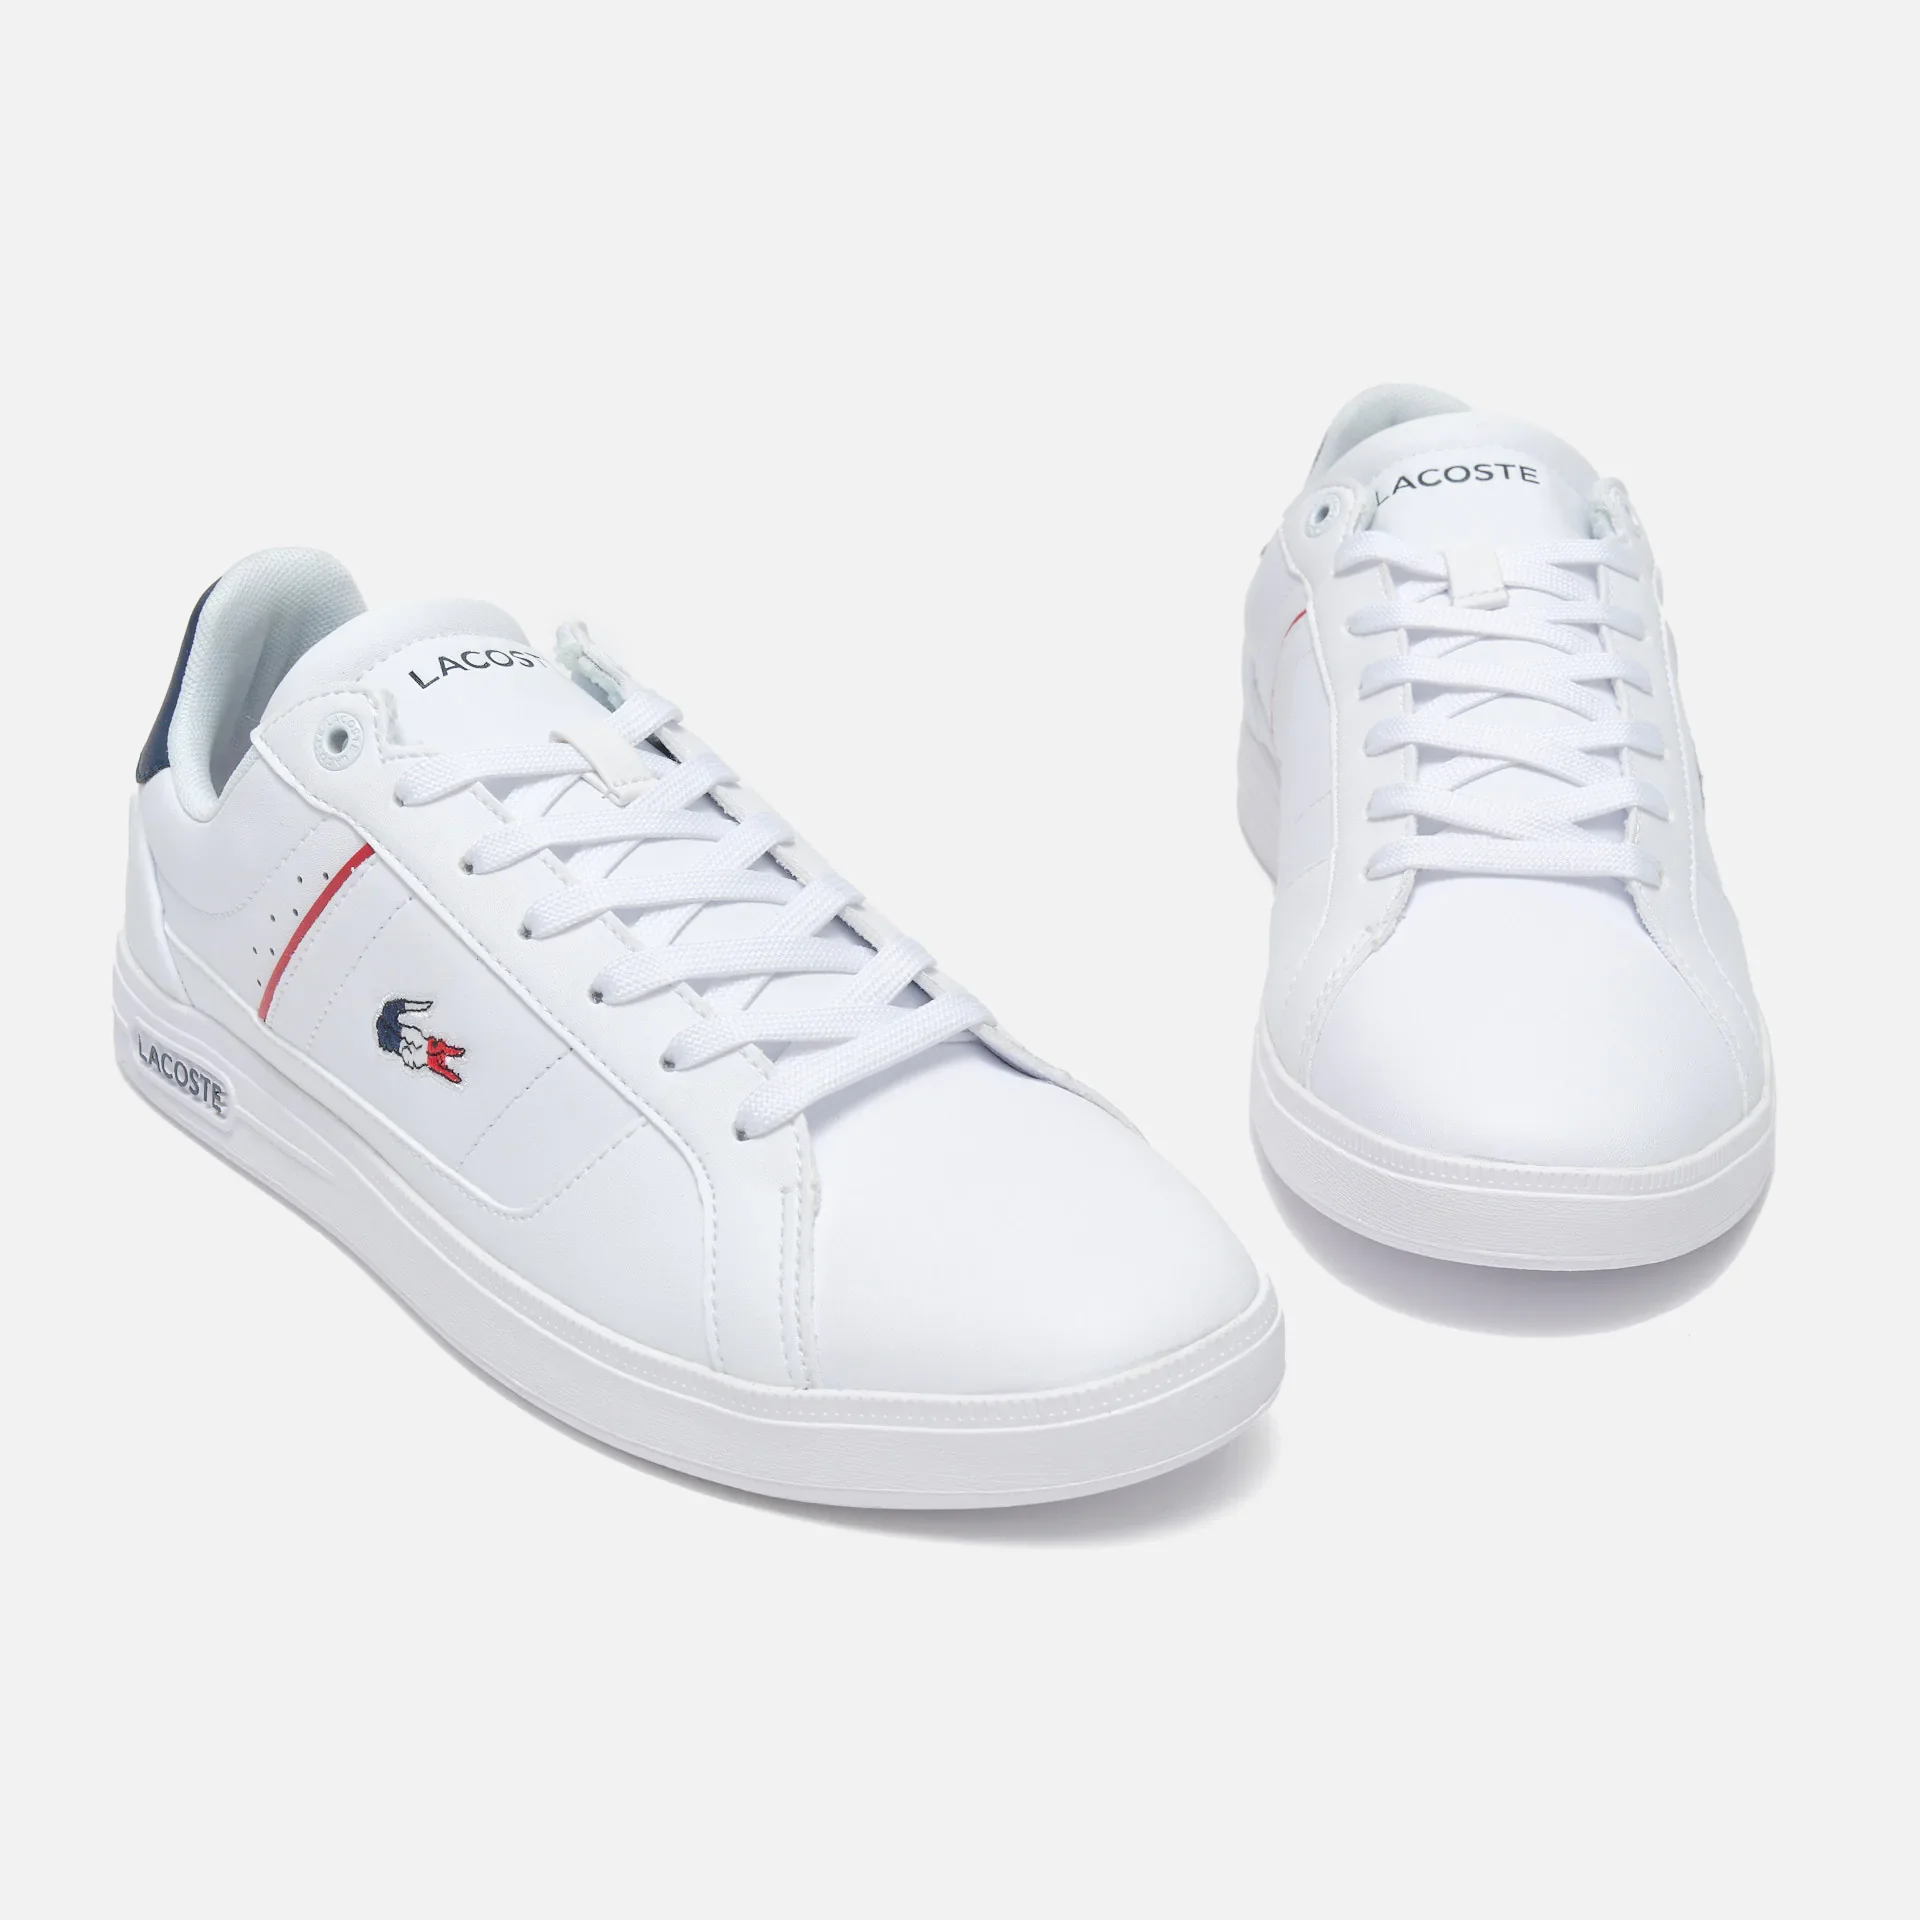 Lacoste Europa Pro Tri 123 1 SMA Sneaker White/Navy/Red